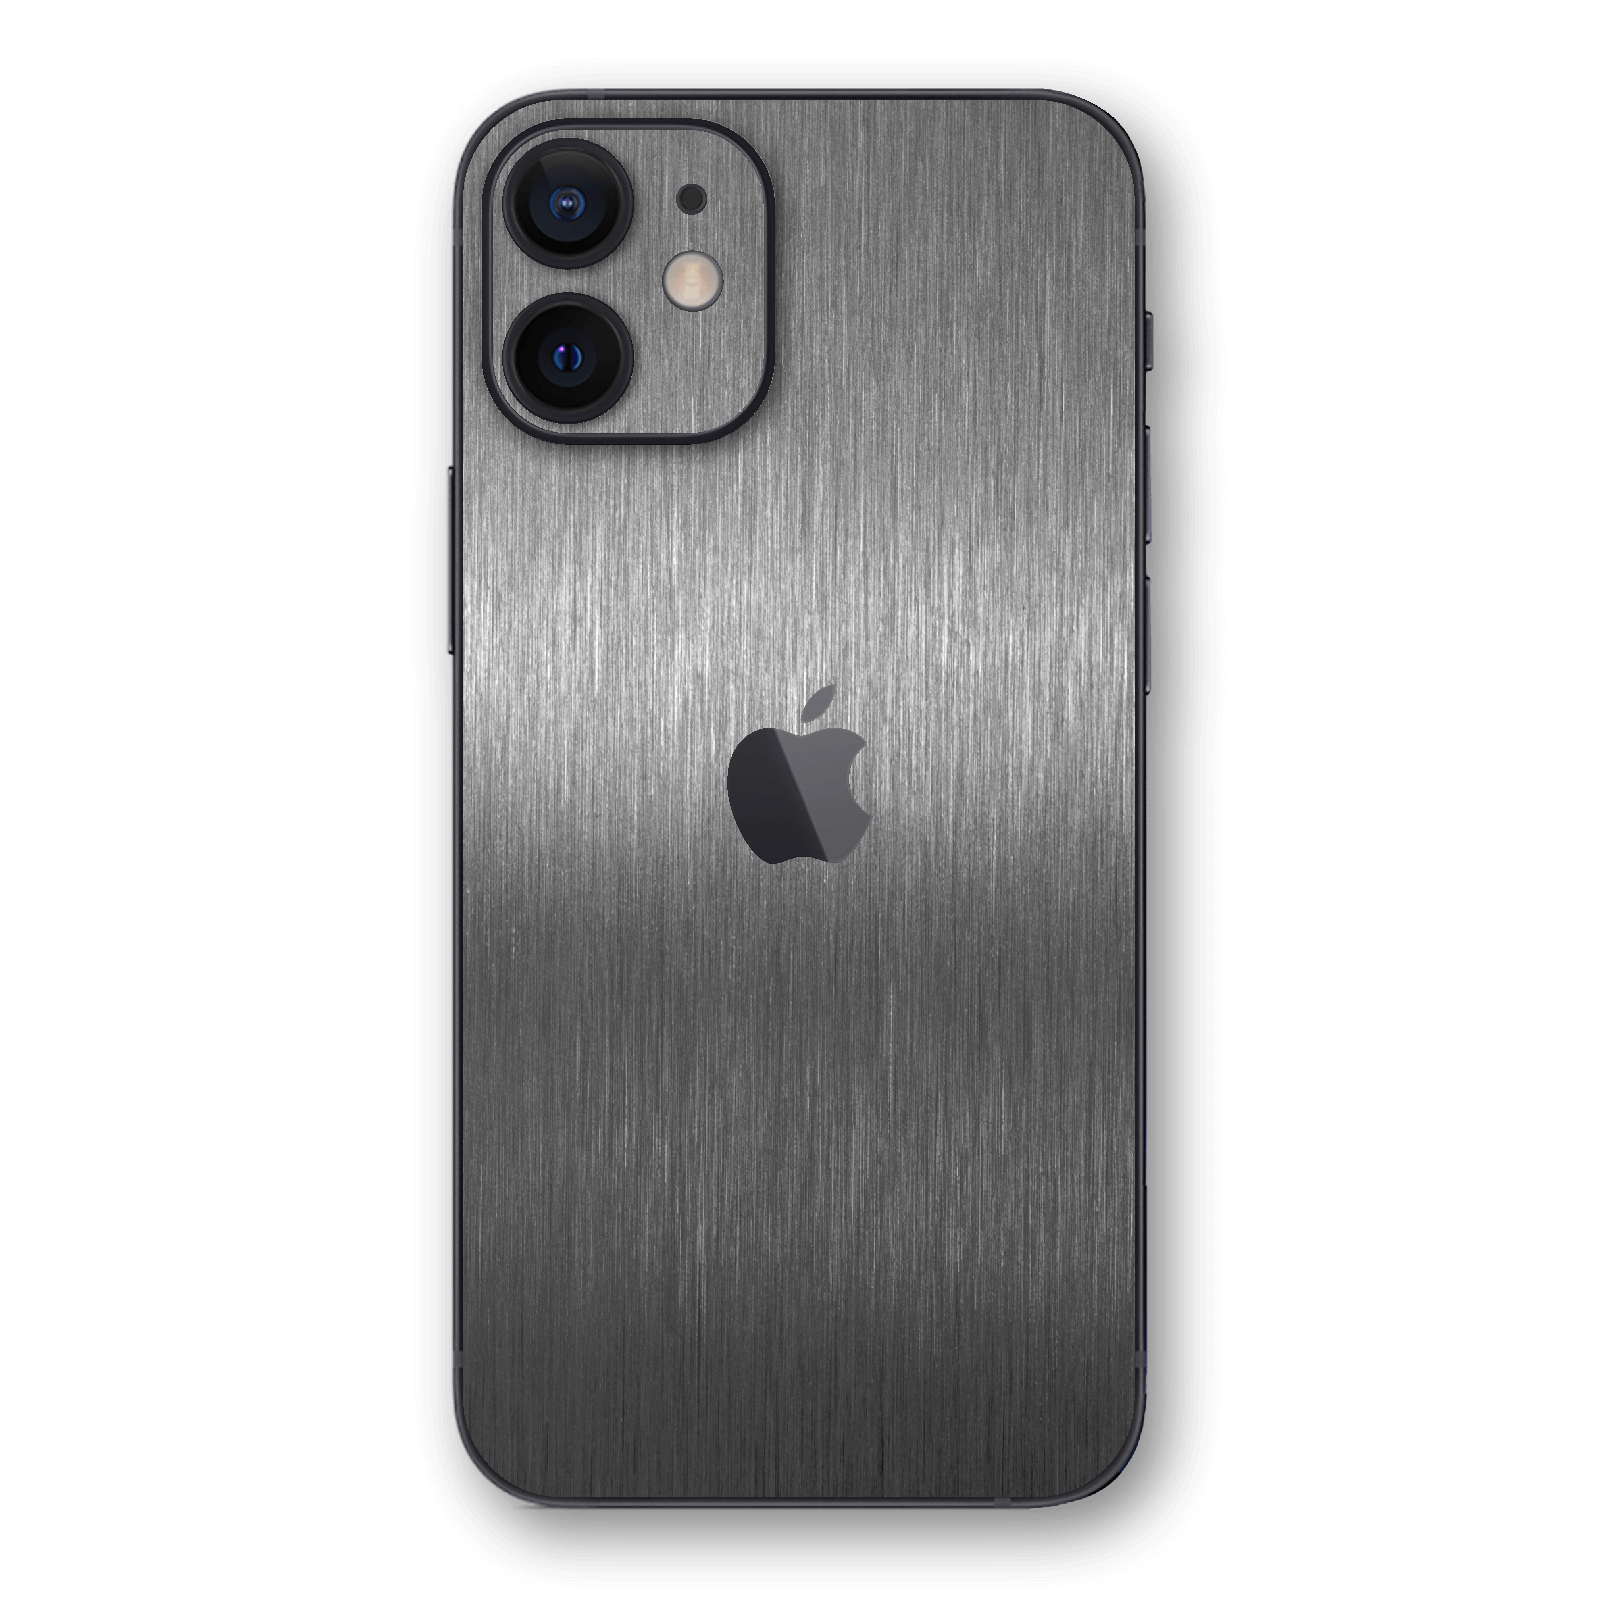 iPhone 12 mini Brushed Metal Titanium Metallic Skin Wrap Sticker Decal Cover Protector by EasySkinz | EasySkinz.com